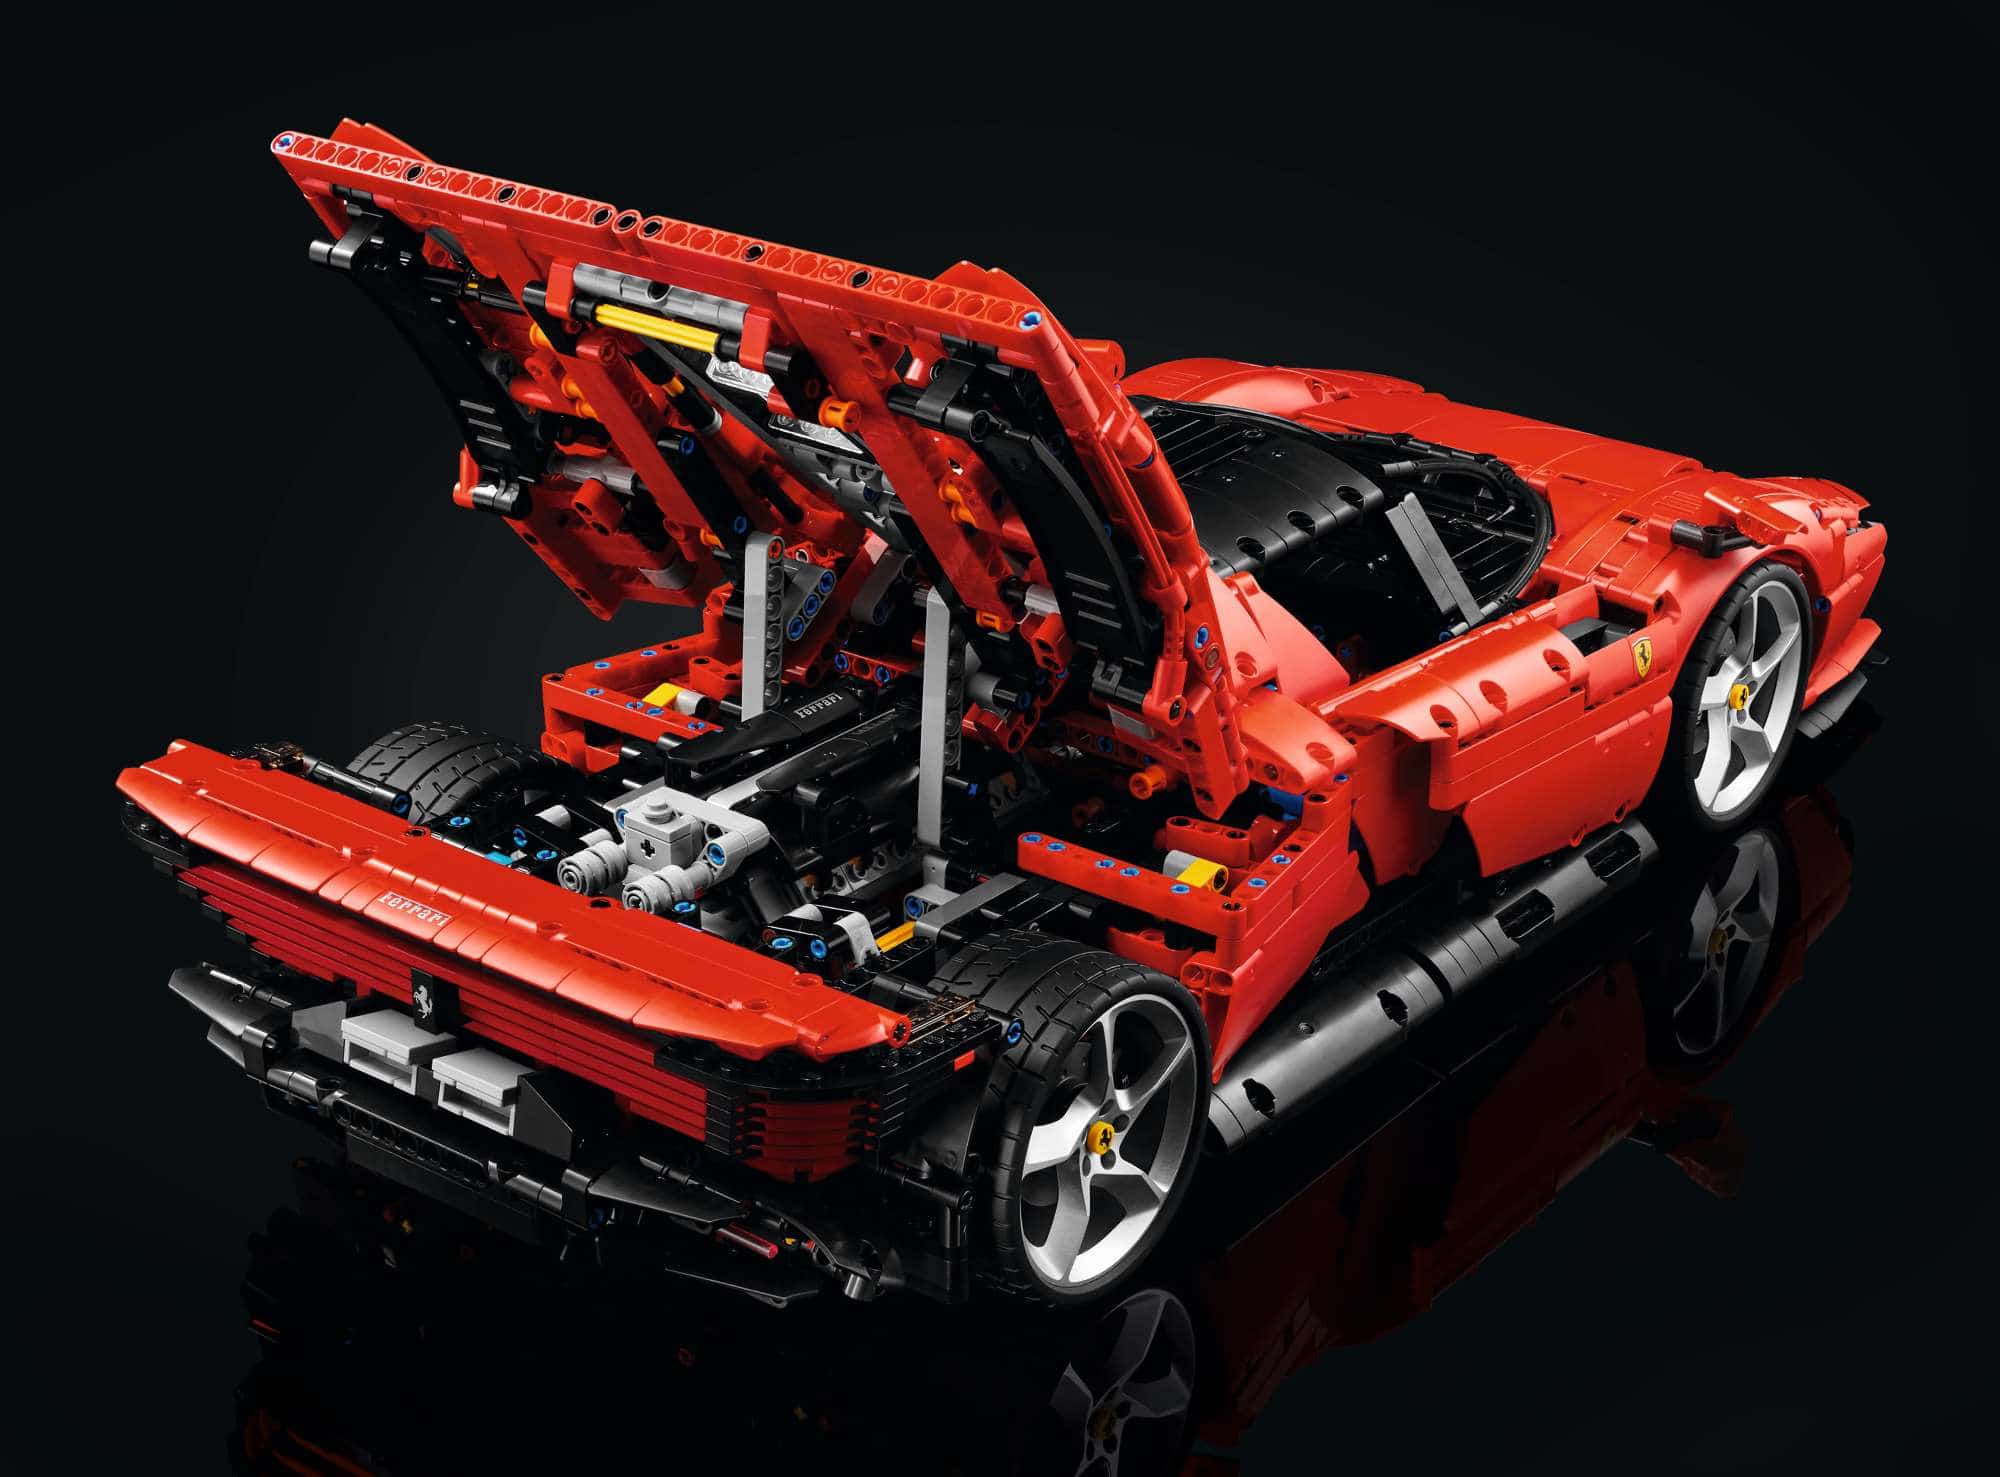 42143 Lego Technic - Ferrari Daytona SP3